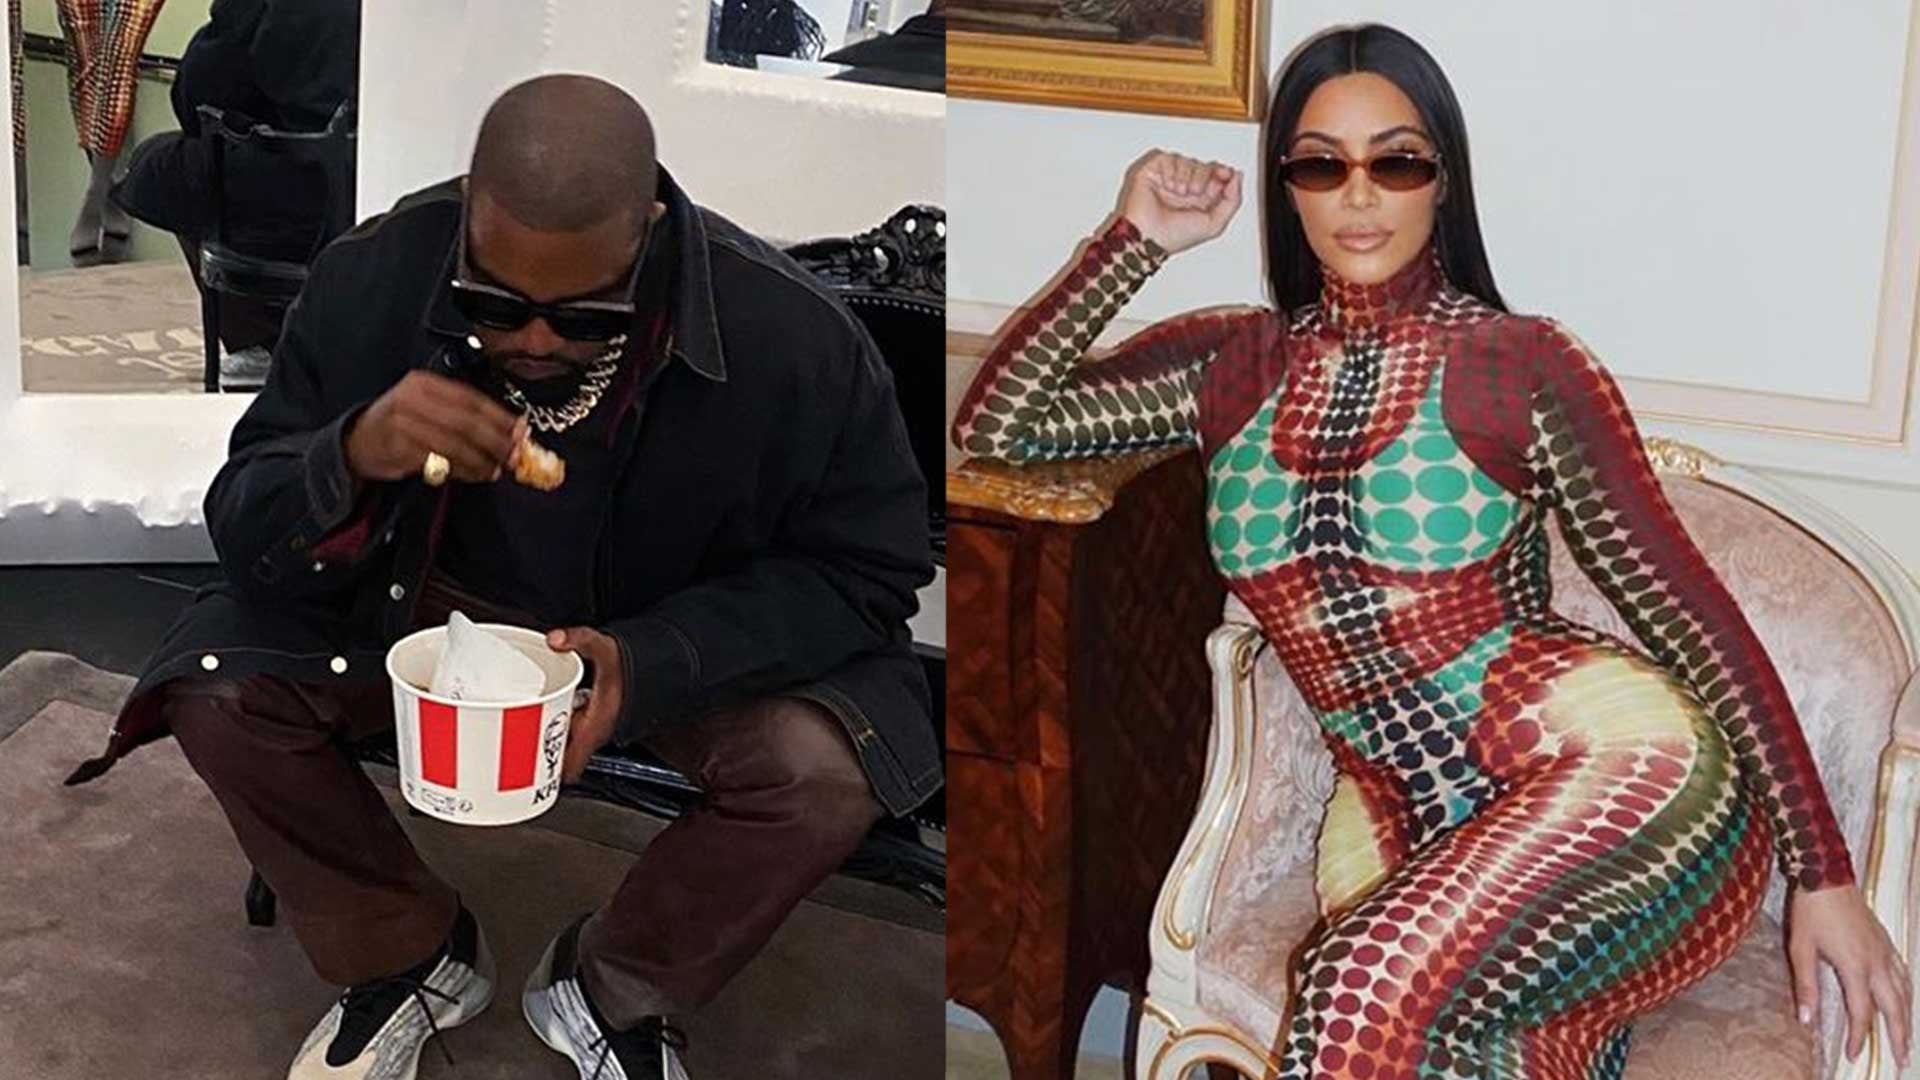 Kim Kardashian and Kanye West Enjoy a Day Full of KFC and PDA in Paris